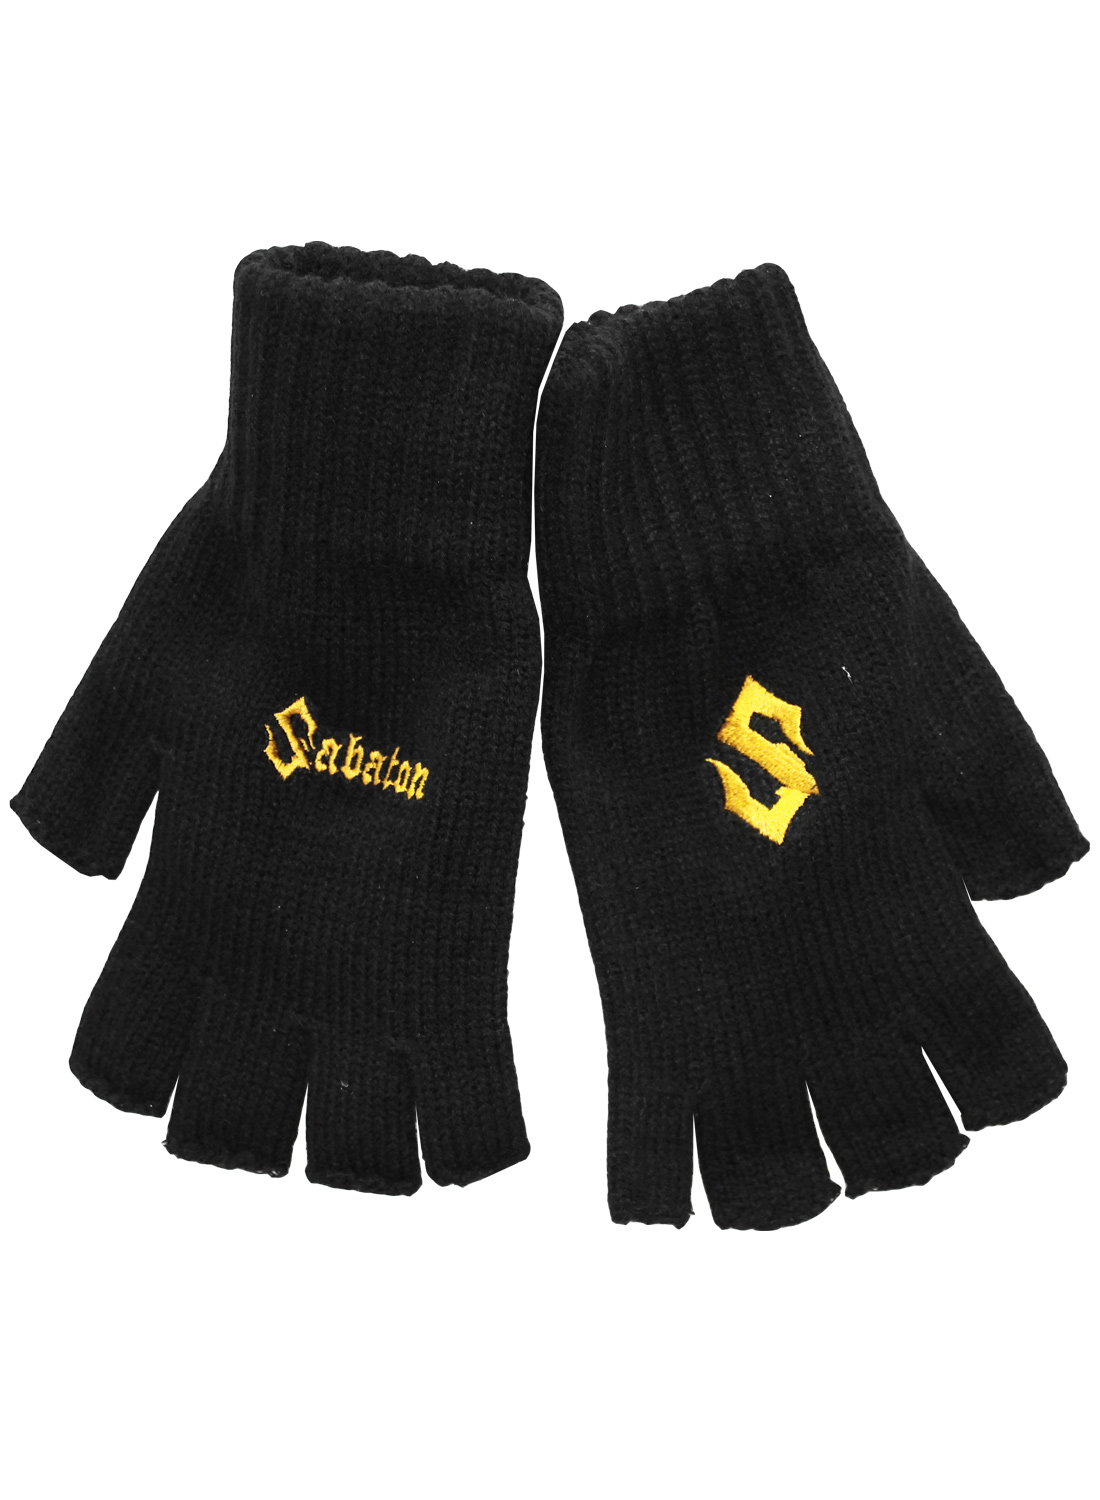 Sabaton Fingerless Gloves